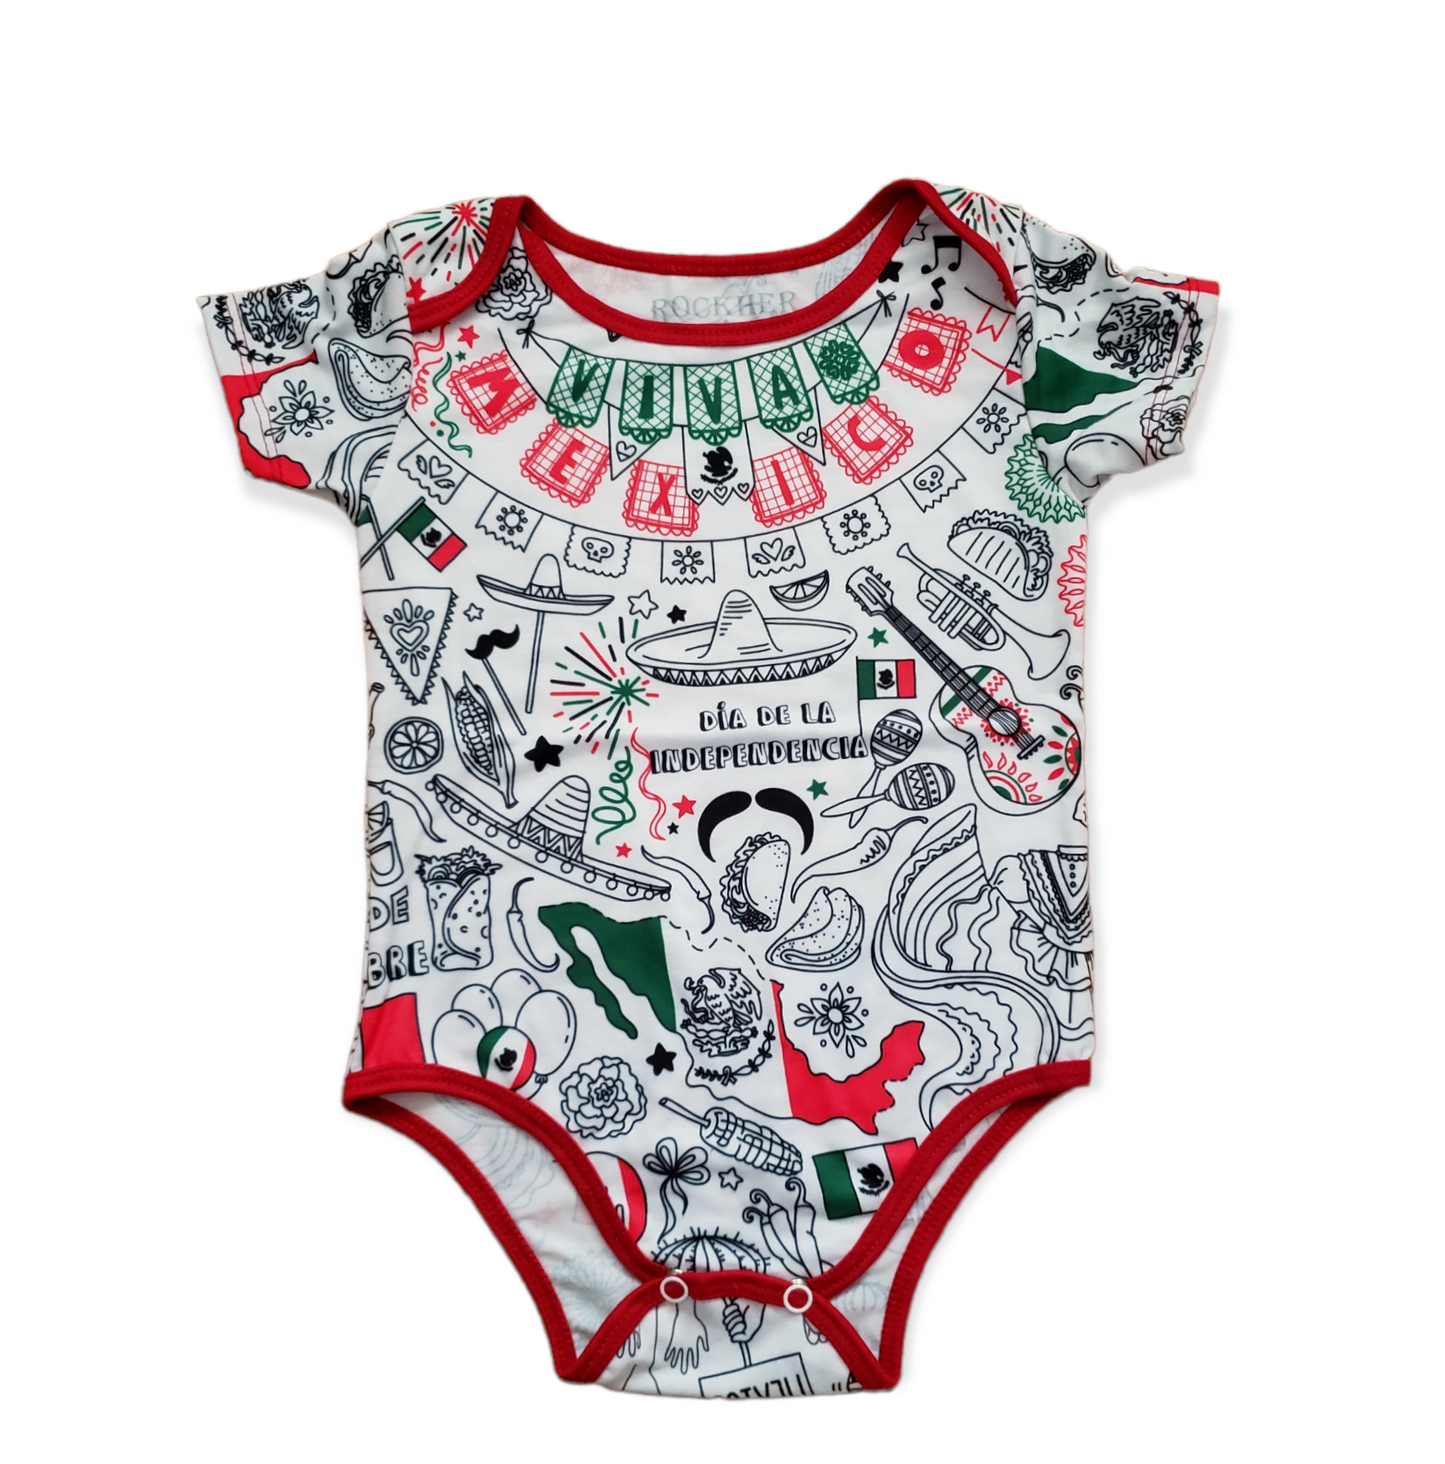 Viva Mexico Illustrated Graphic Baby Bodysuit